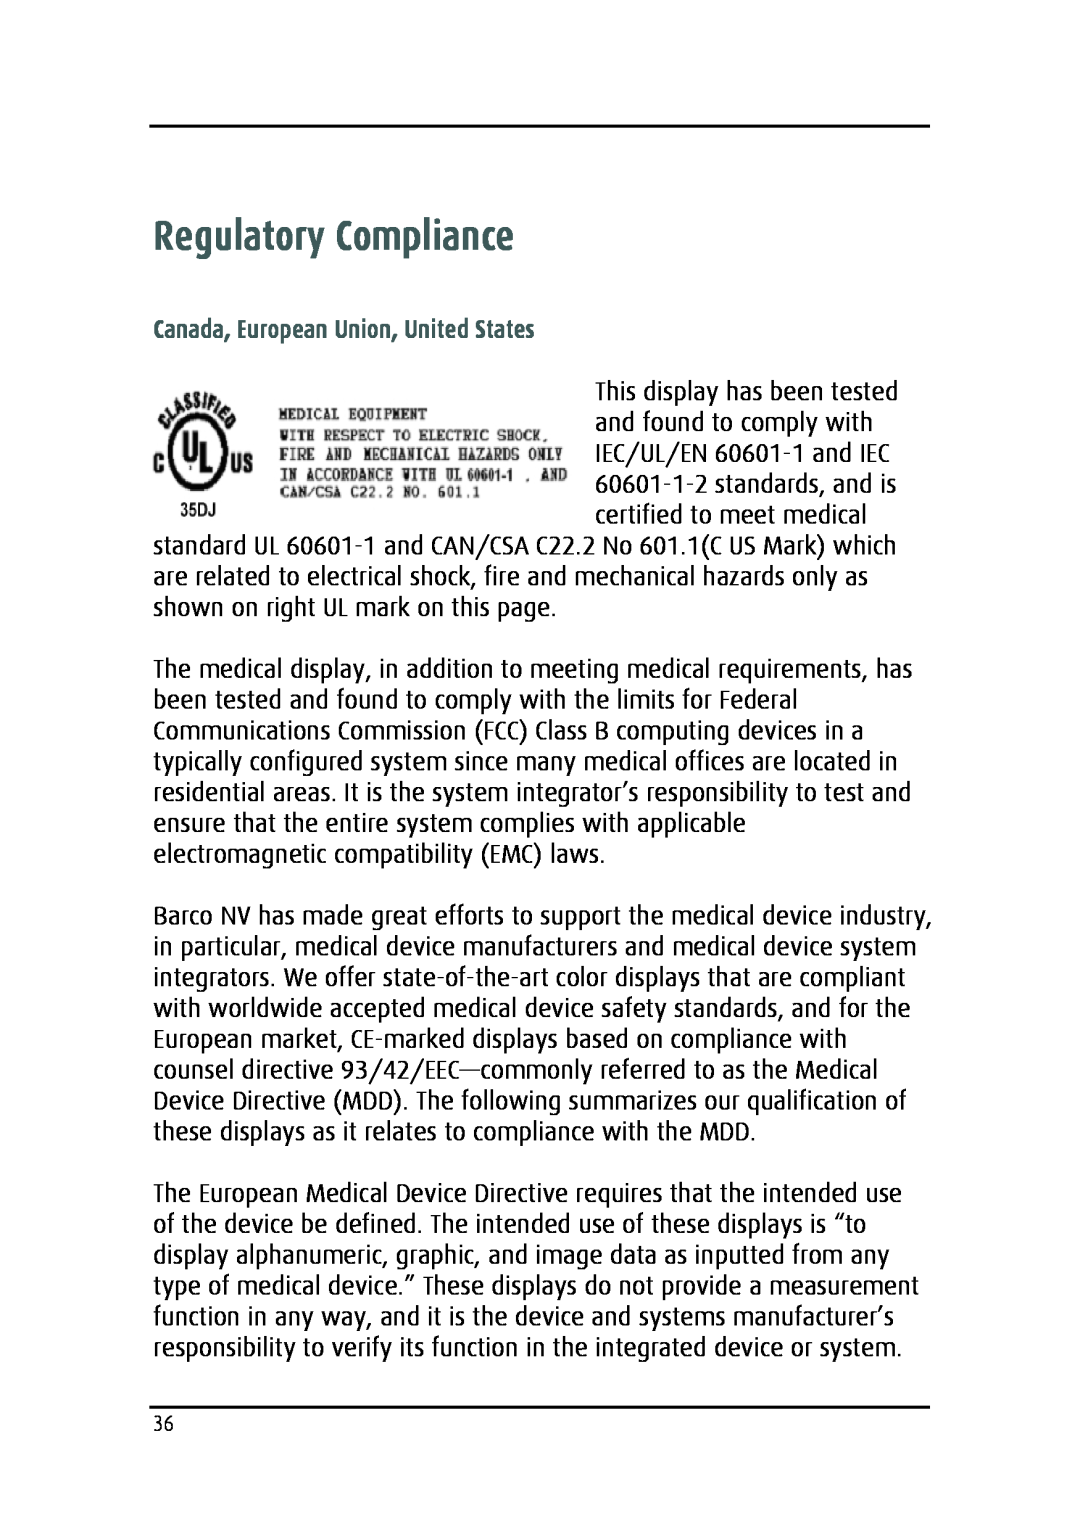 Barco MDRC-2124 user manual Regulatory Compliance, Canada, European Union, United States 